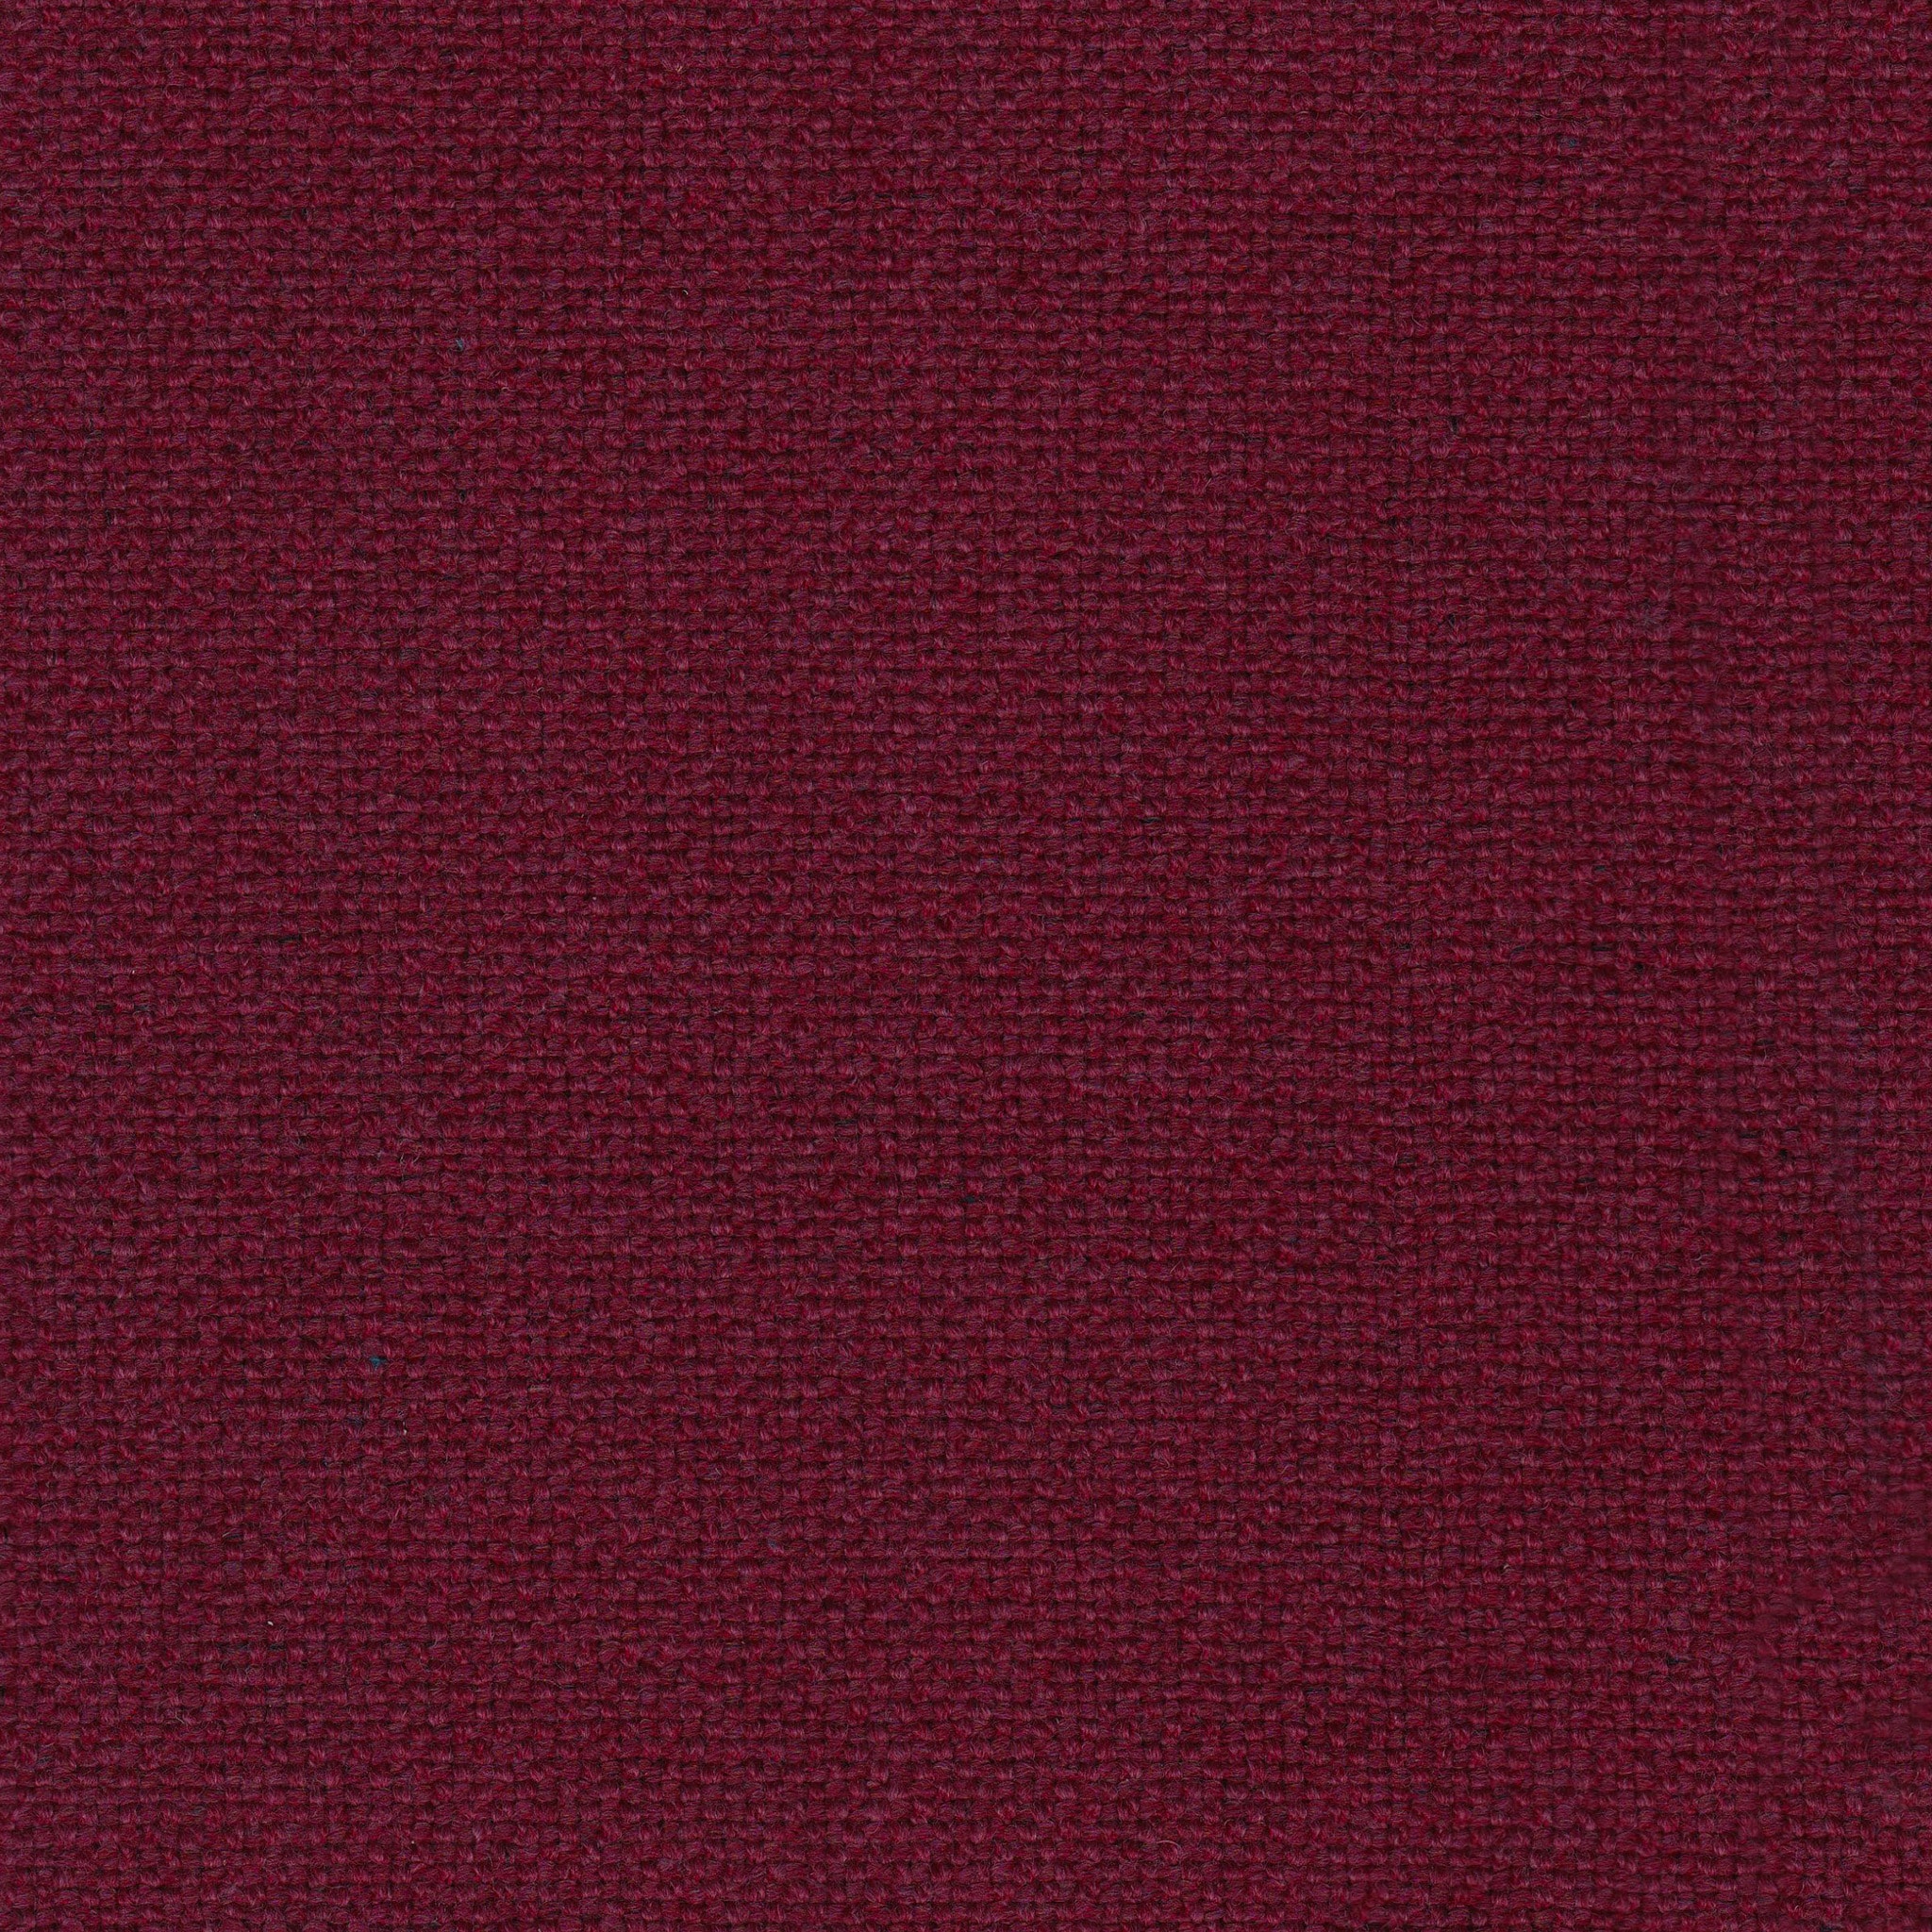 Red Wine Fabric